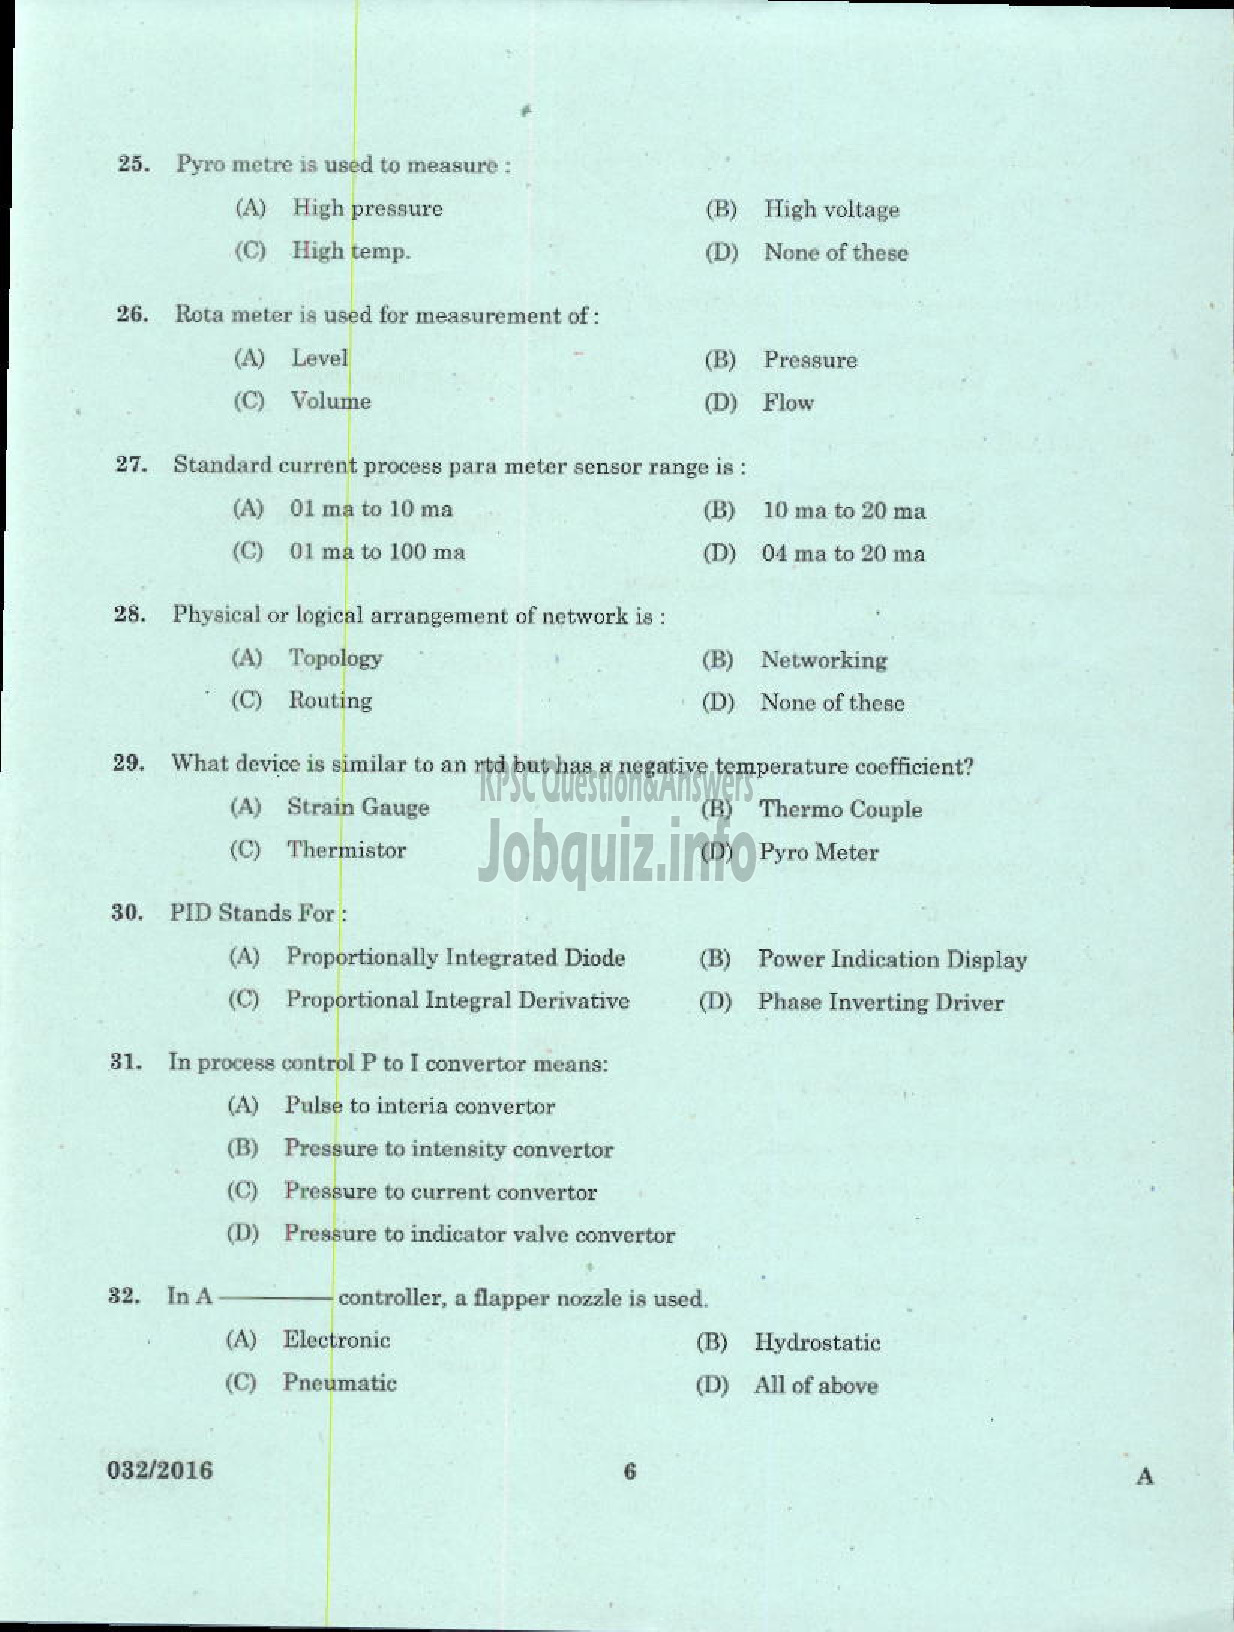 Kerala PSC Question Paper - TRADESMAN INSTRUMENT MECHANIC TECHNICAL EDUCATION-4